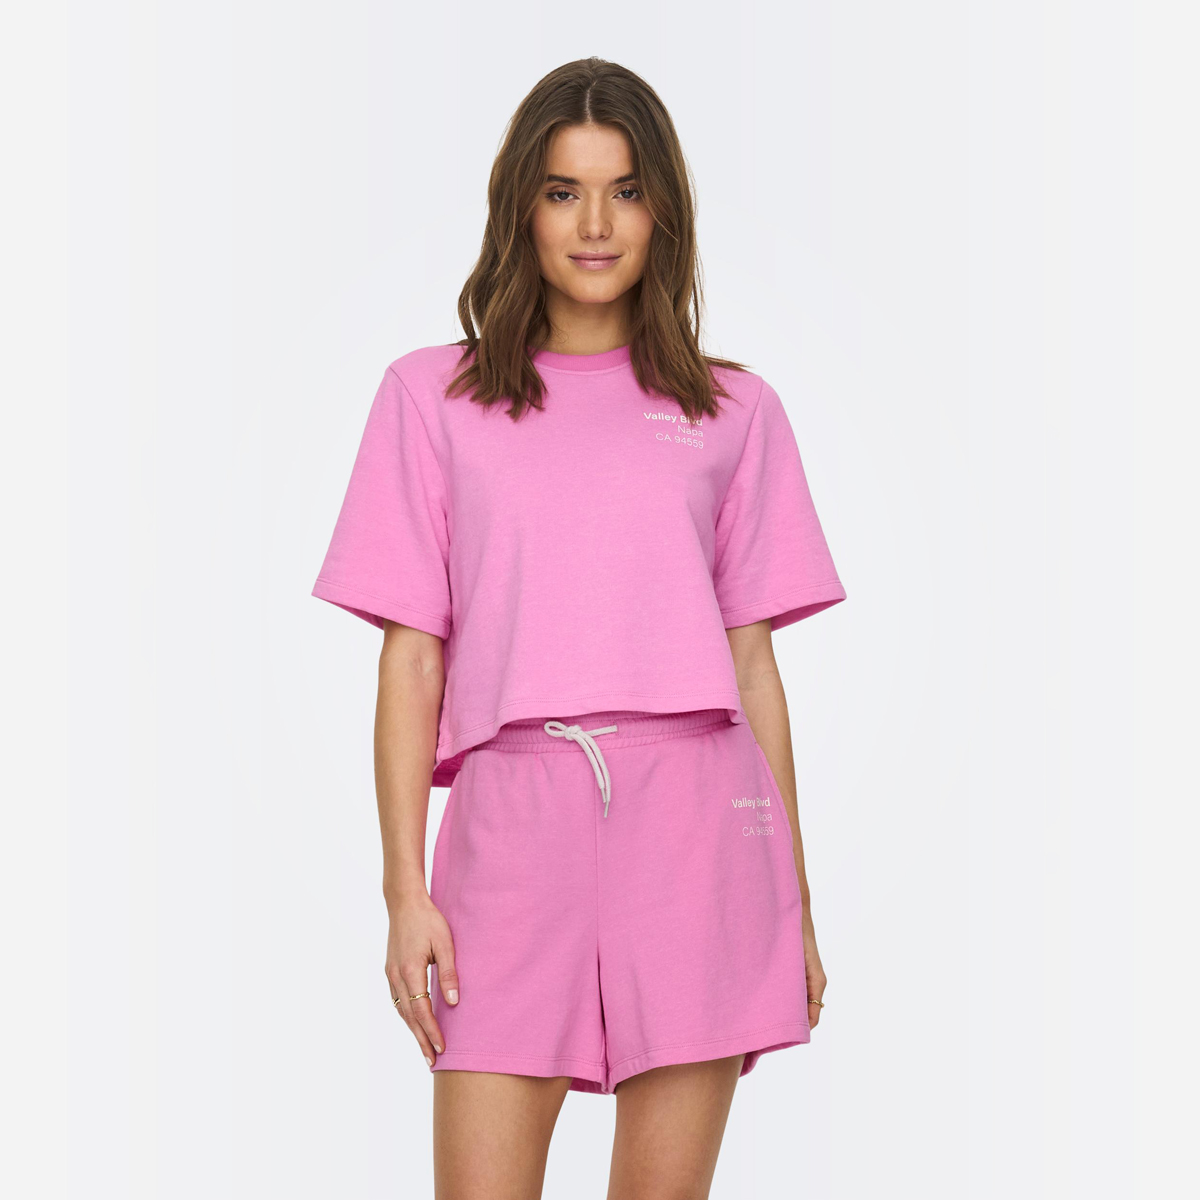 Buy Short-Sleeved Sweatshirt - Pink Online in Kuwait | Boutiqaat